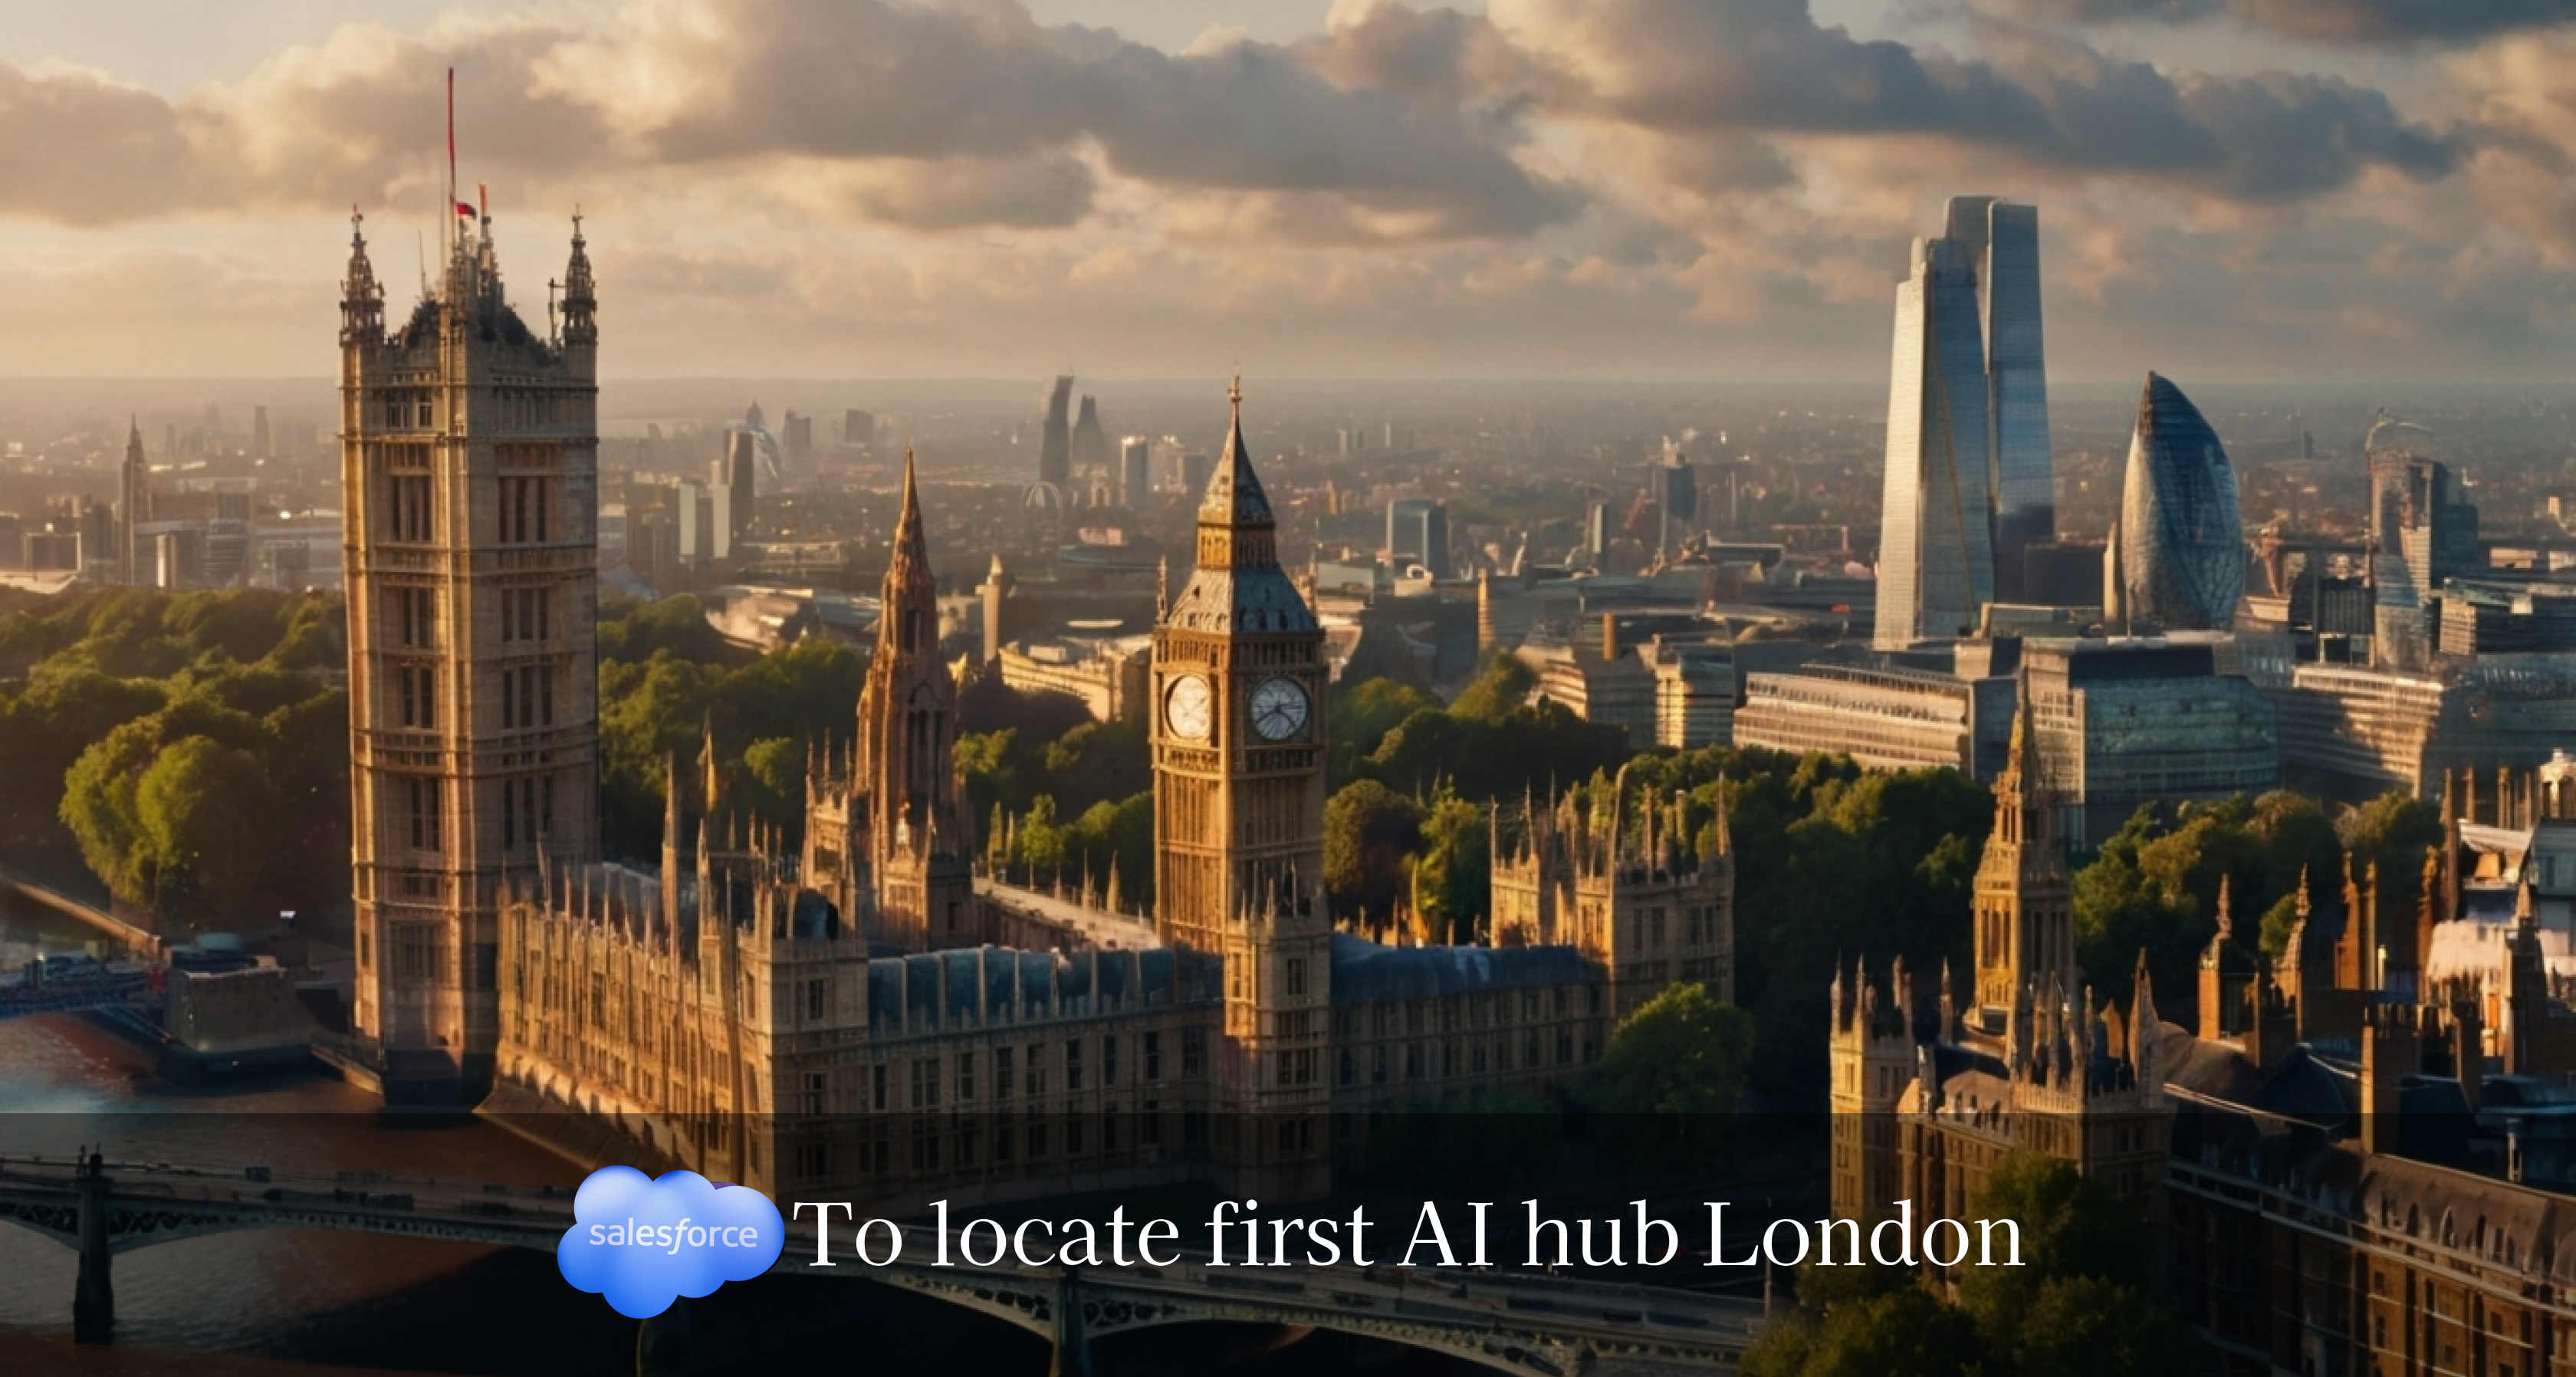 Salesforce to locate first AI hub London